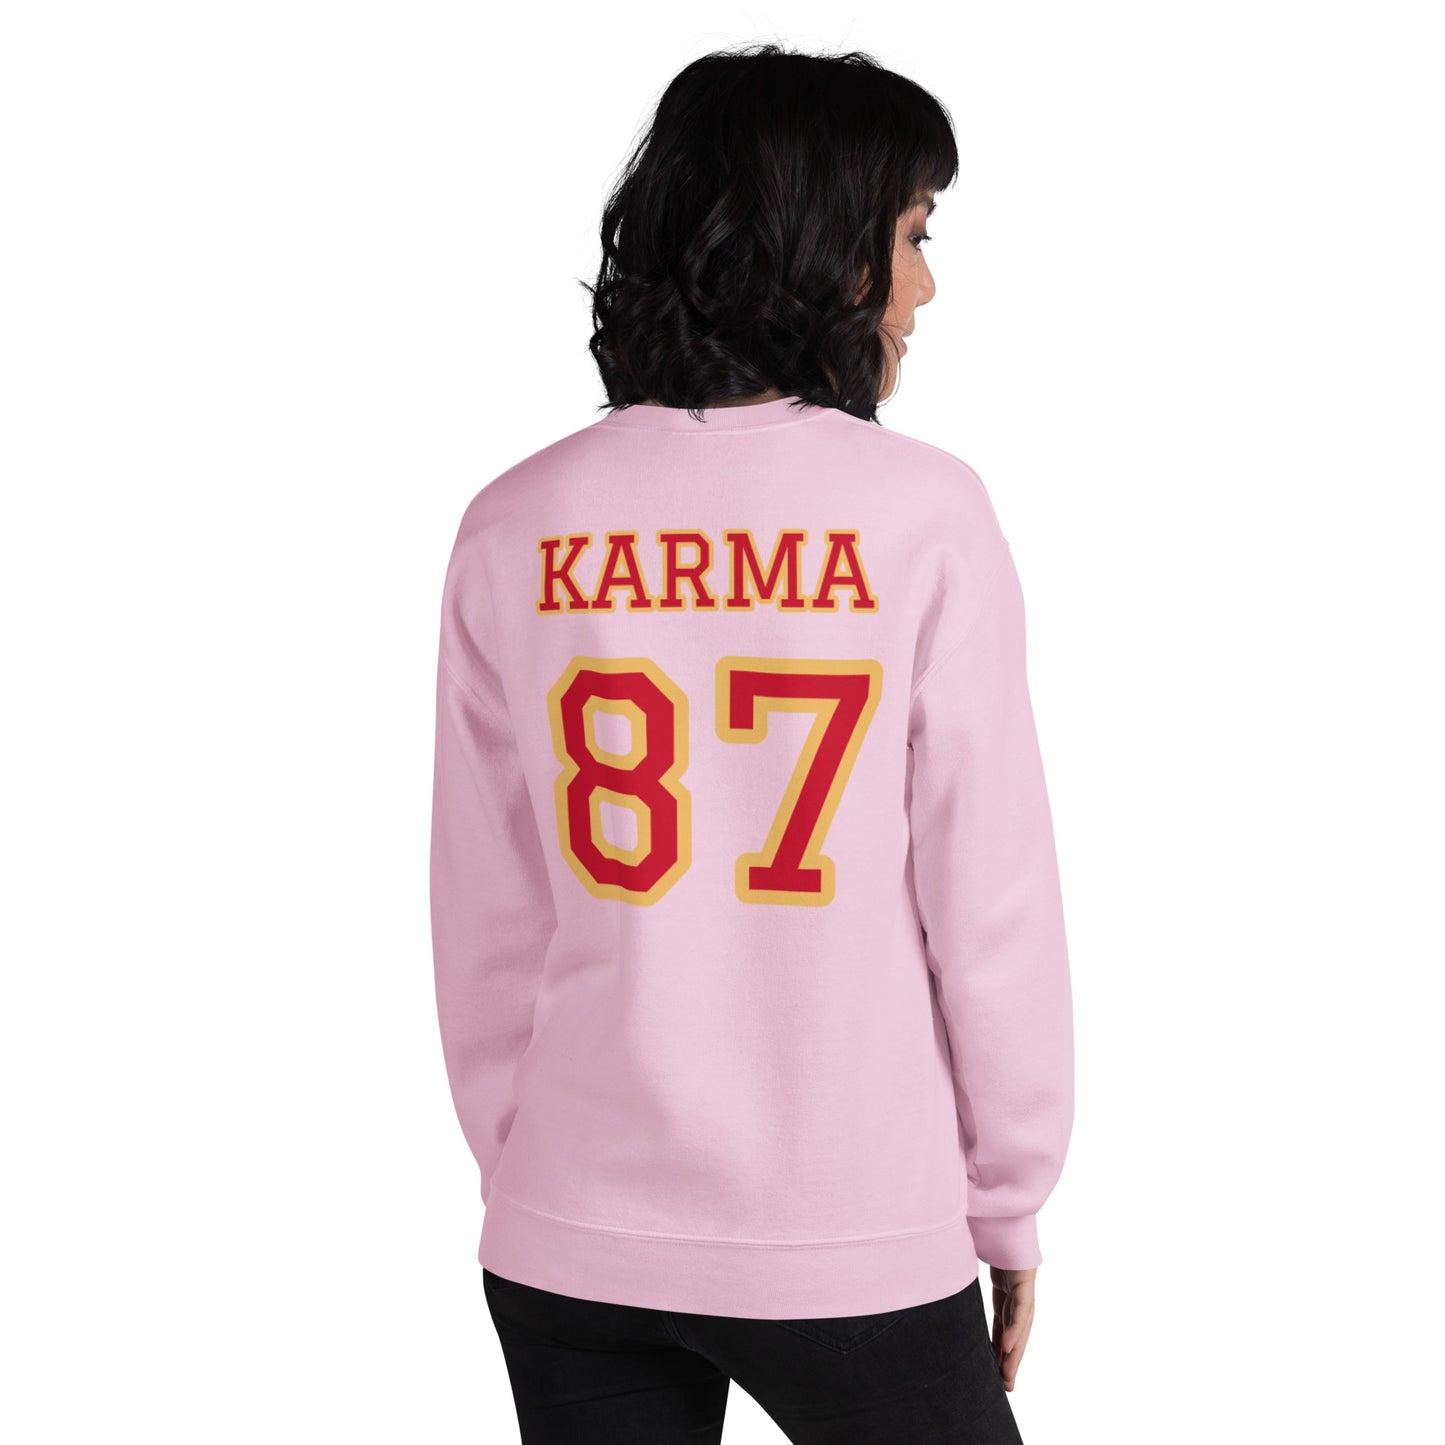 KARMA 87 - Chiefs Colors - Unisex Sweatshirt